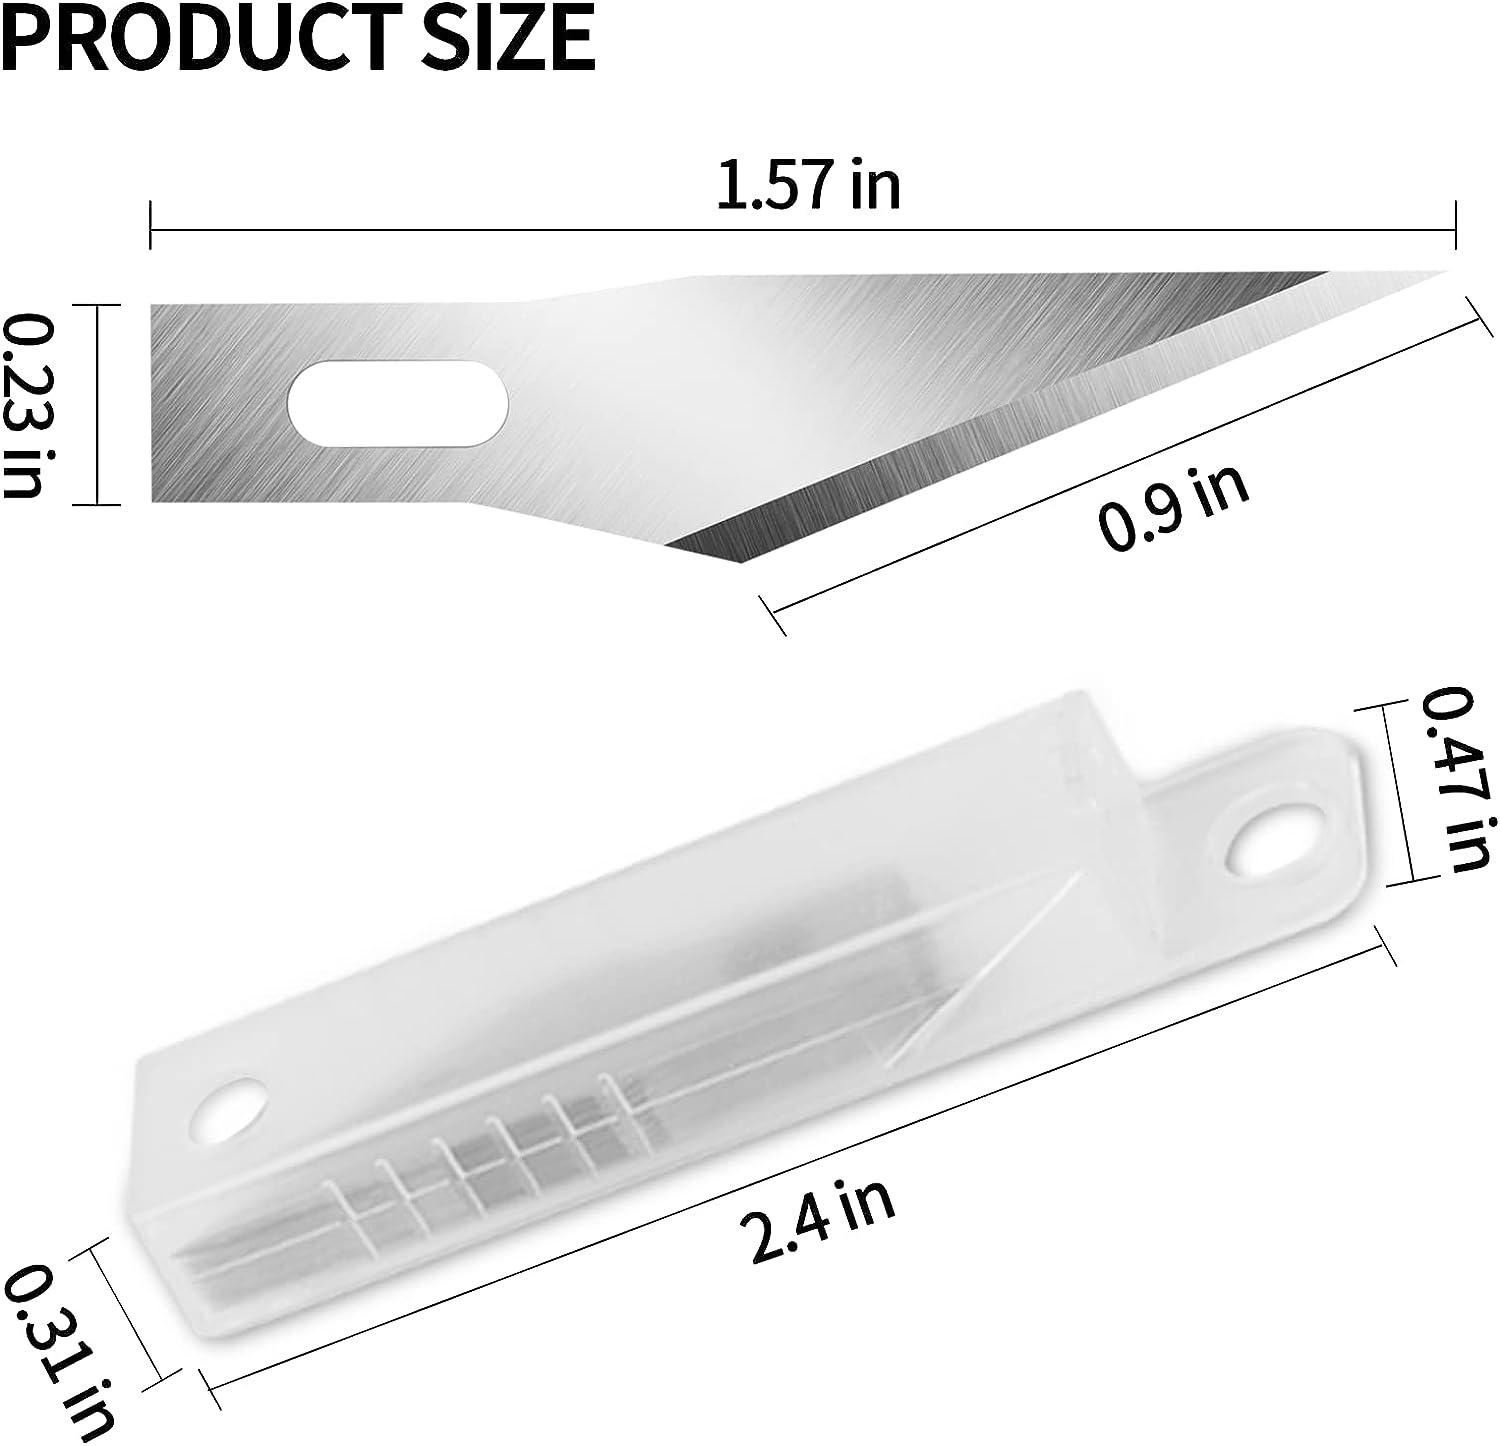 Kit Exacto Knife Set 20Pcs Blade Refill Xacto For Leather Craft Pen Cutter  Razor